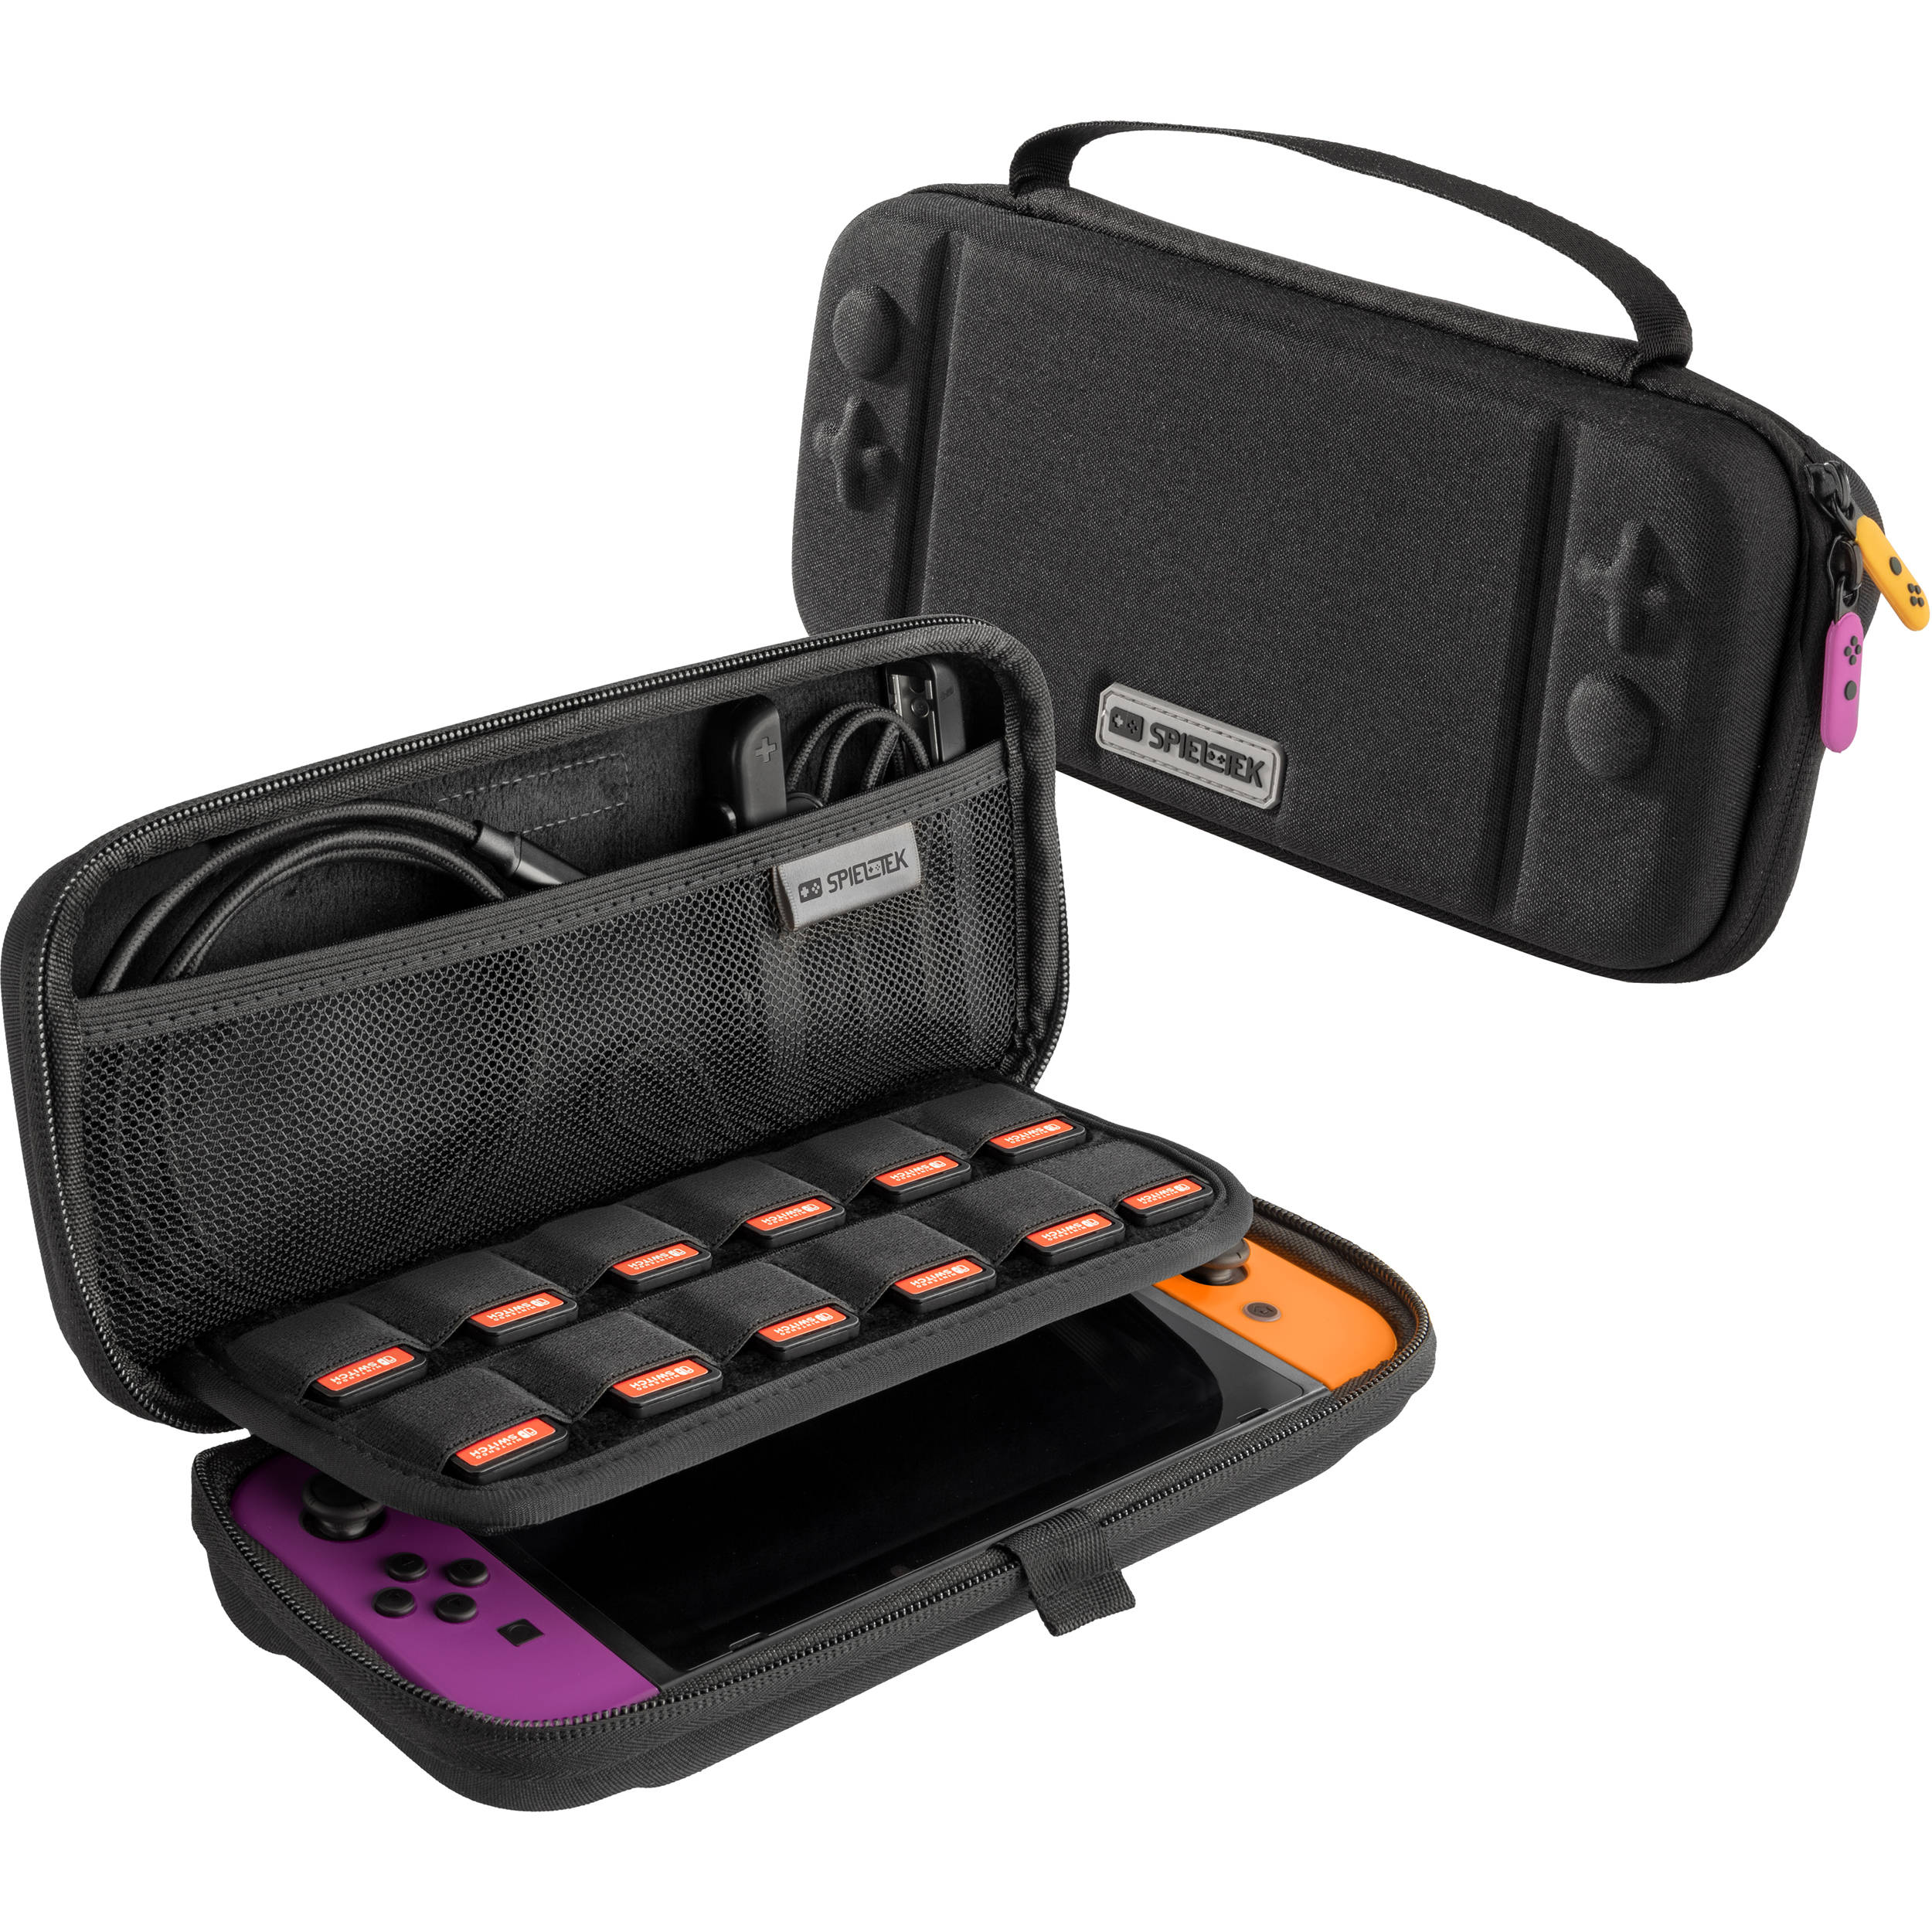 nintendo switch purple case